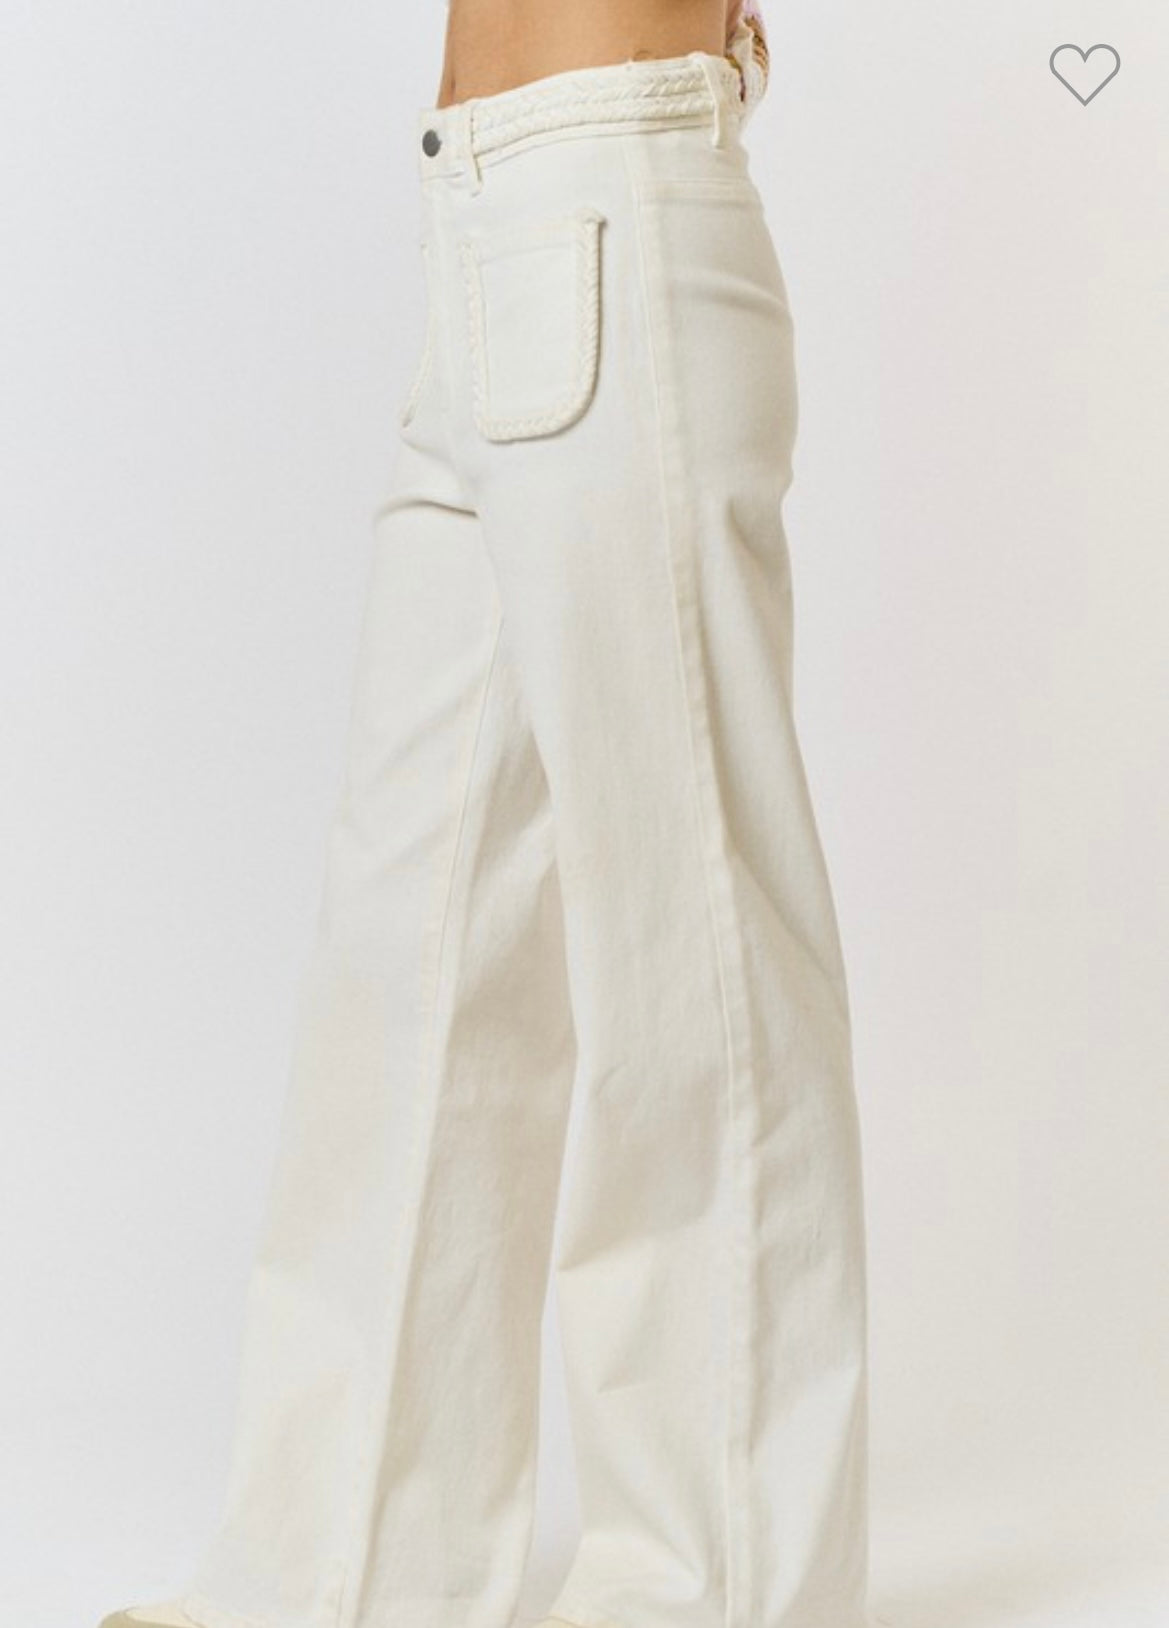 White Front Pocket Jeans